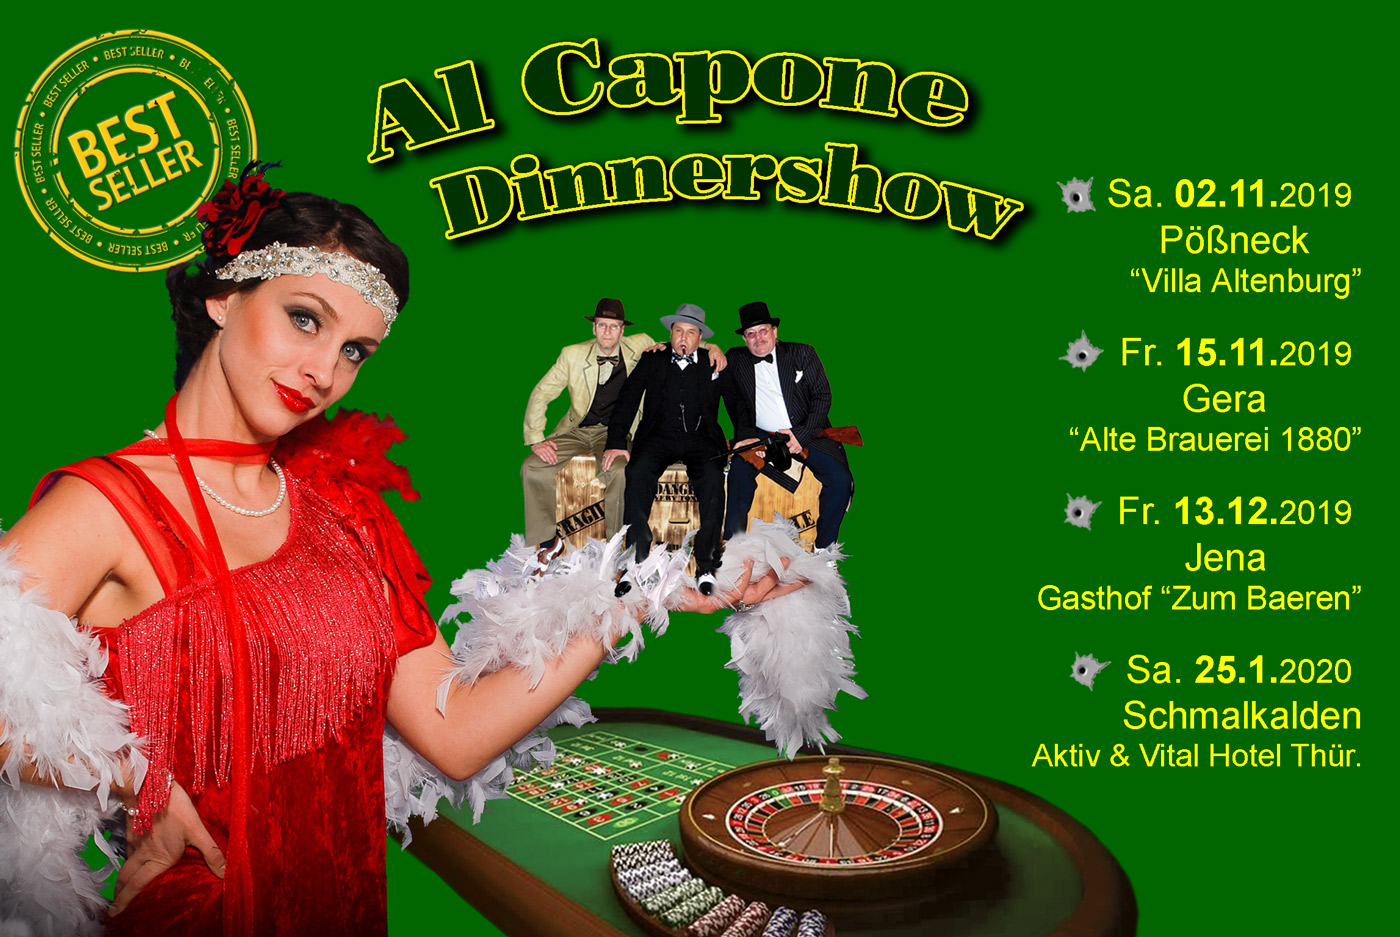 Al Capone Dinnershow mit Comedy, Catering und Casino